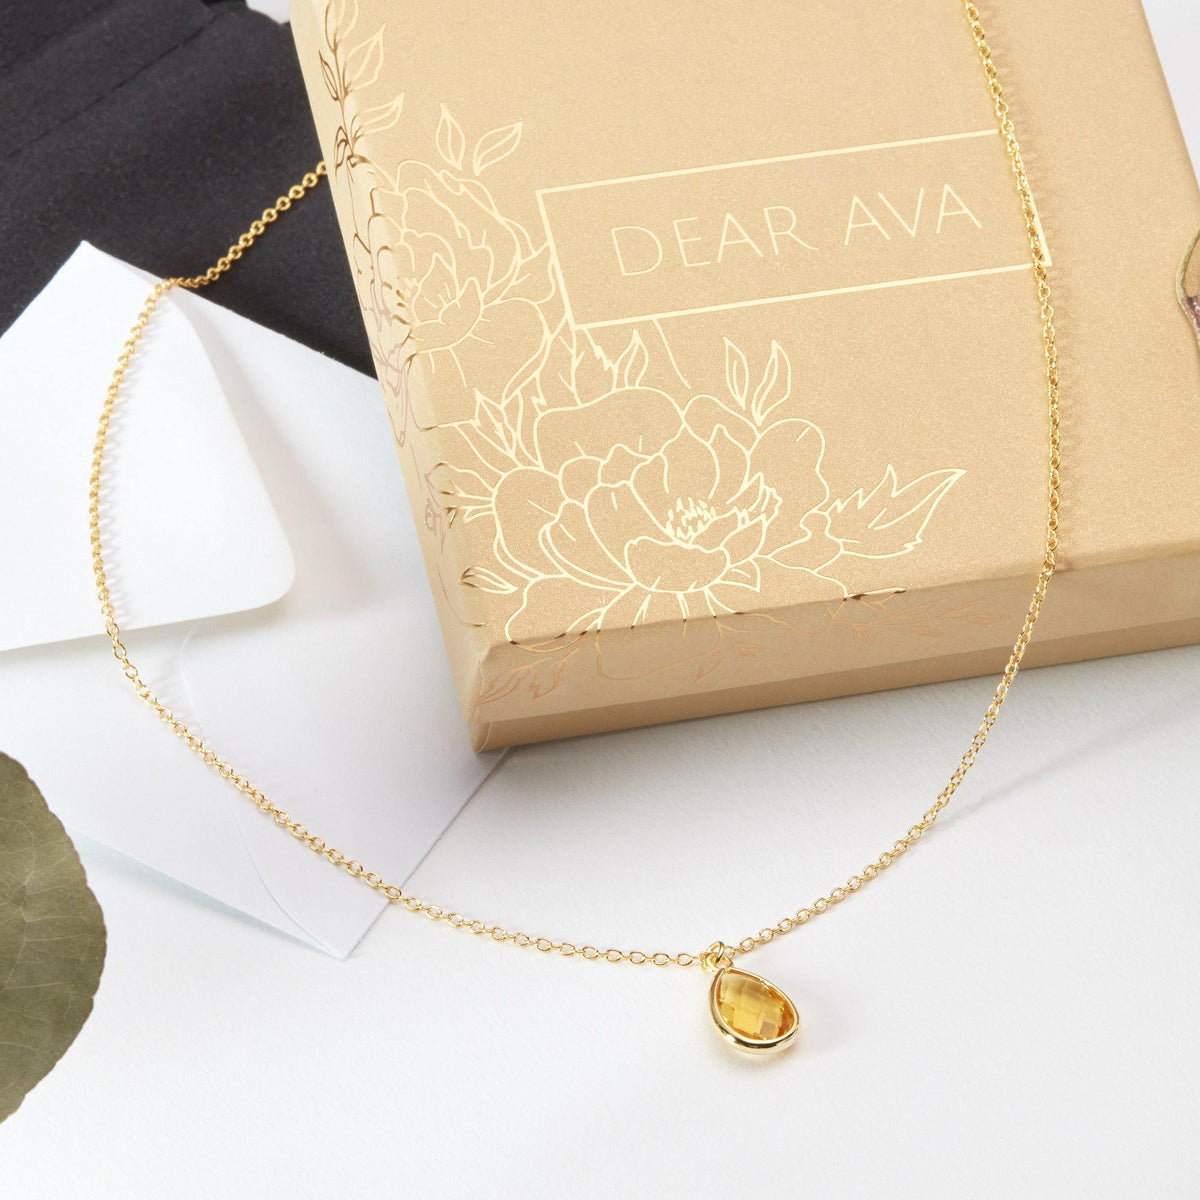 November Birthstone / Topaz Crystal Charm Necklace - Dear Ava